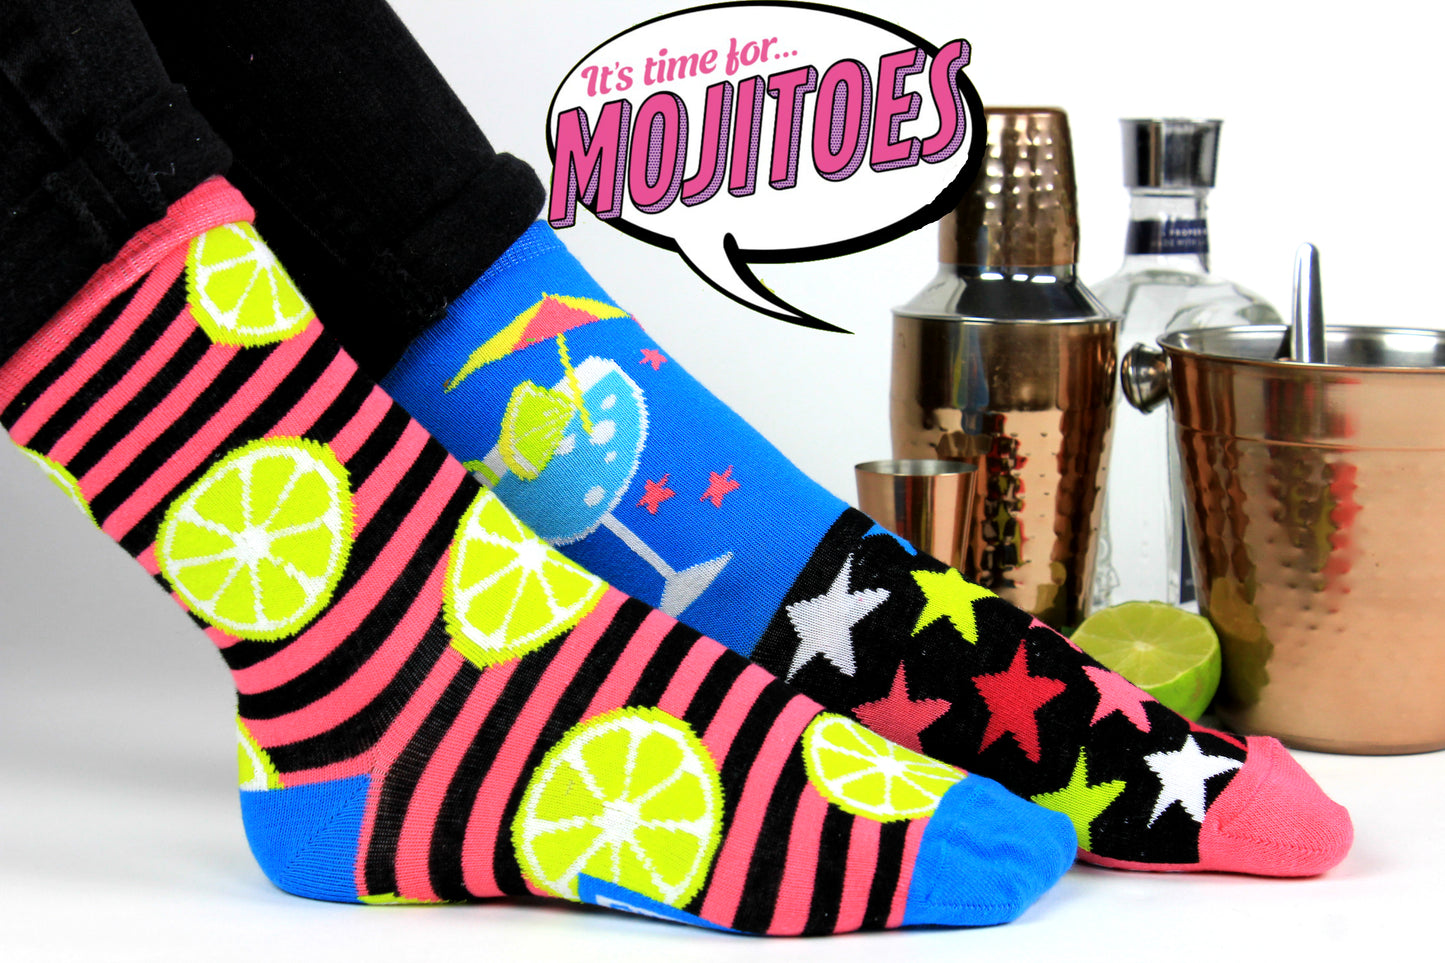 United Oddsocks "Mojitoes 6 Odd Socks